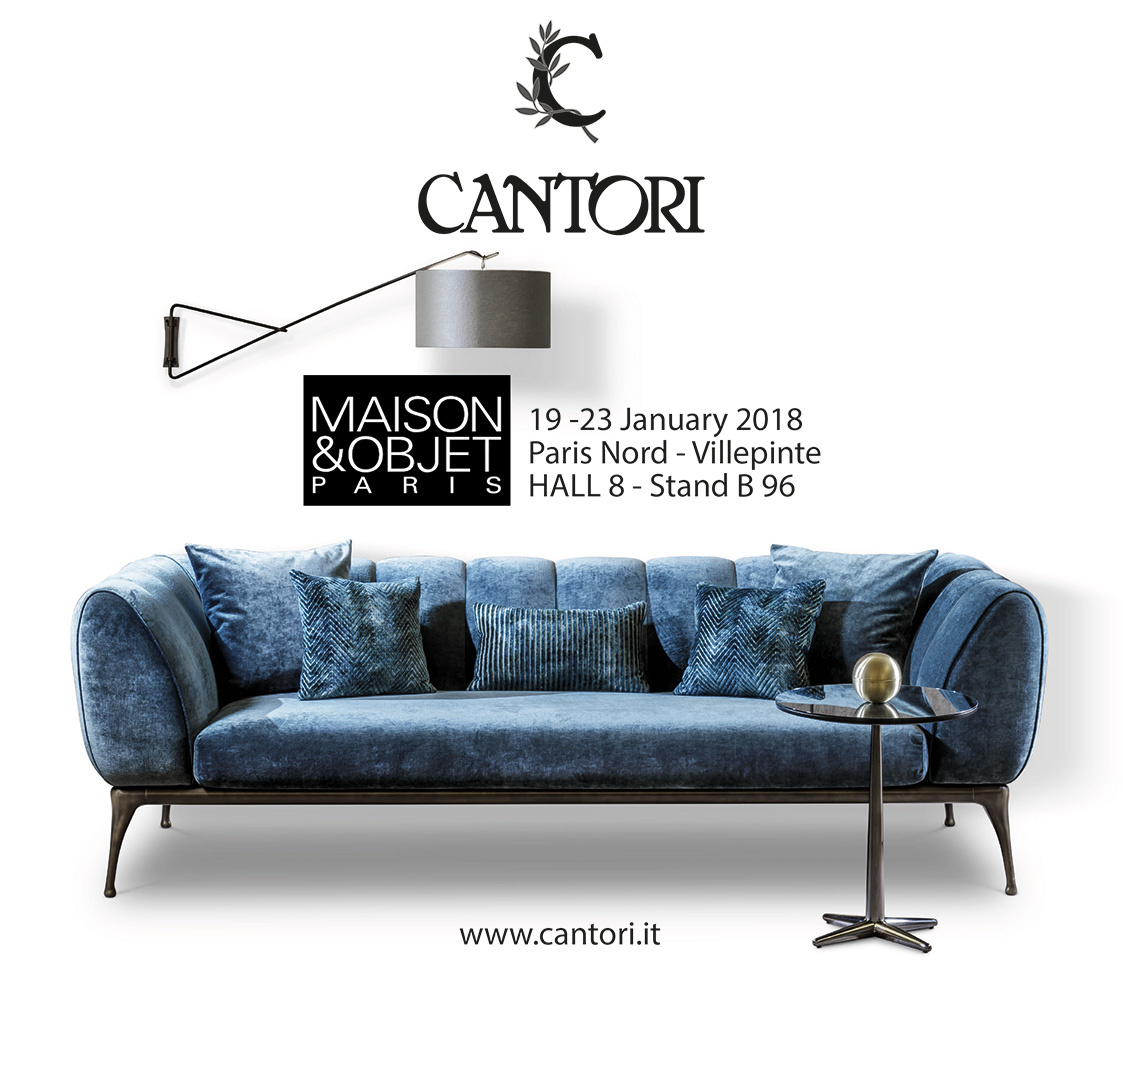 07/12/2017 Cantori at Maison&Objet 2018 in Paris - Cantori